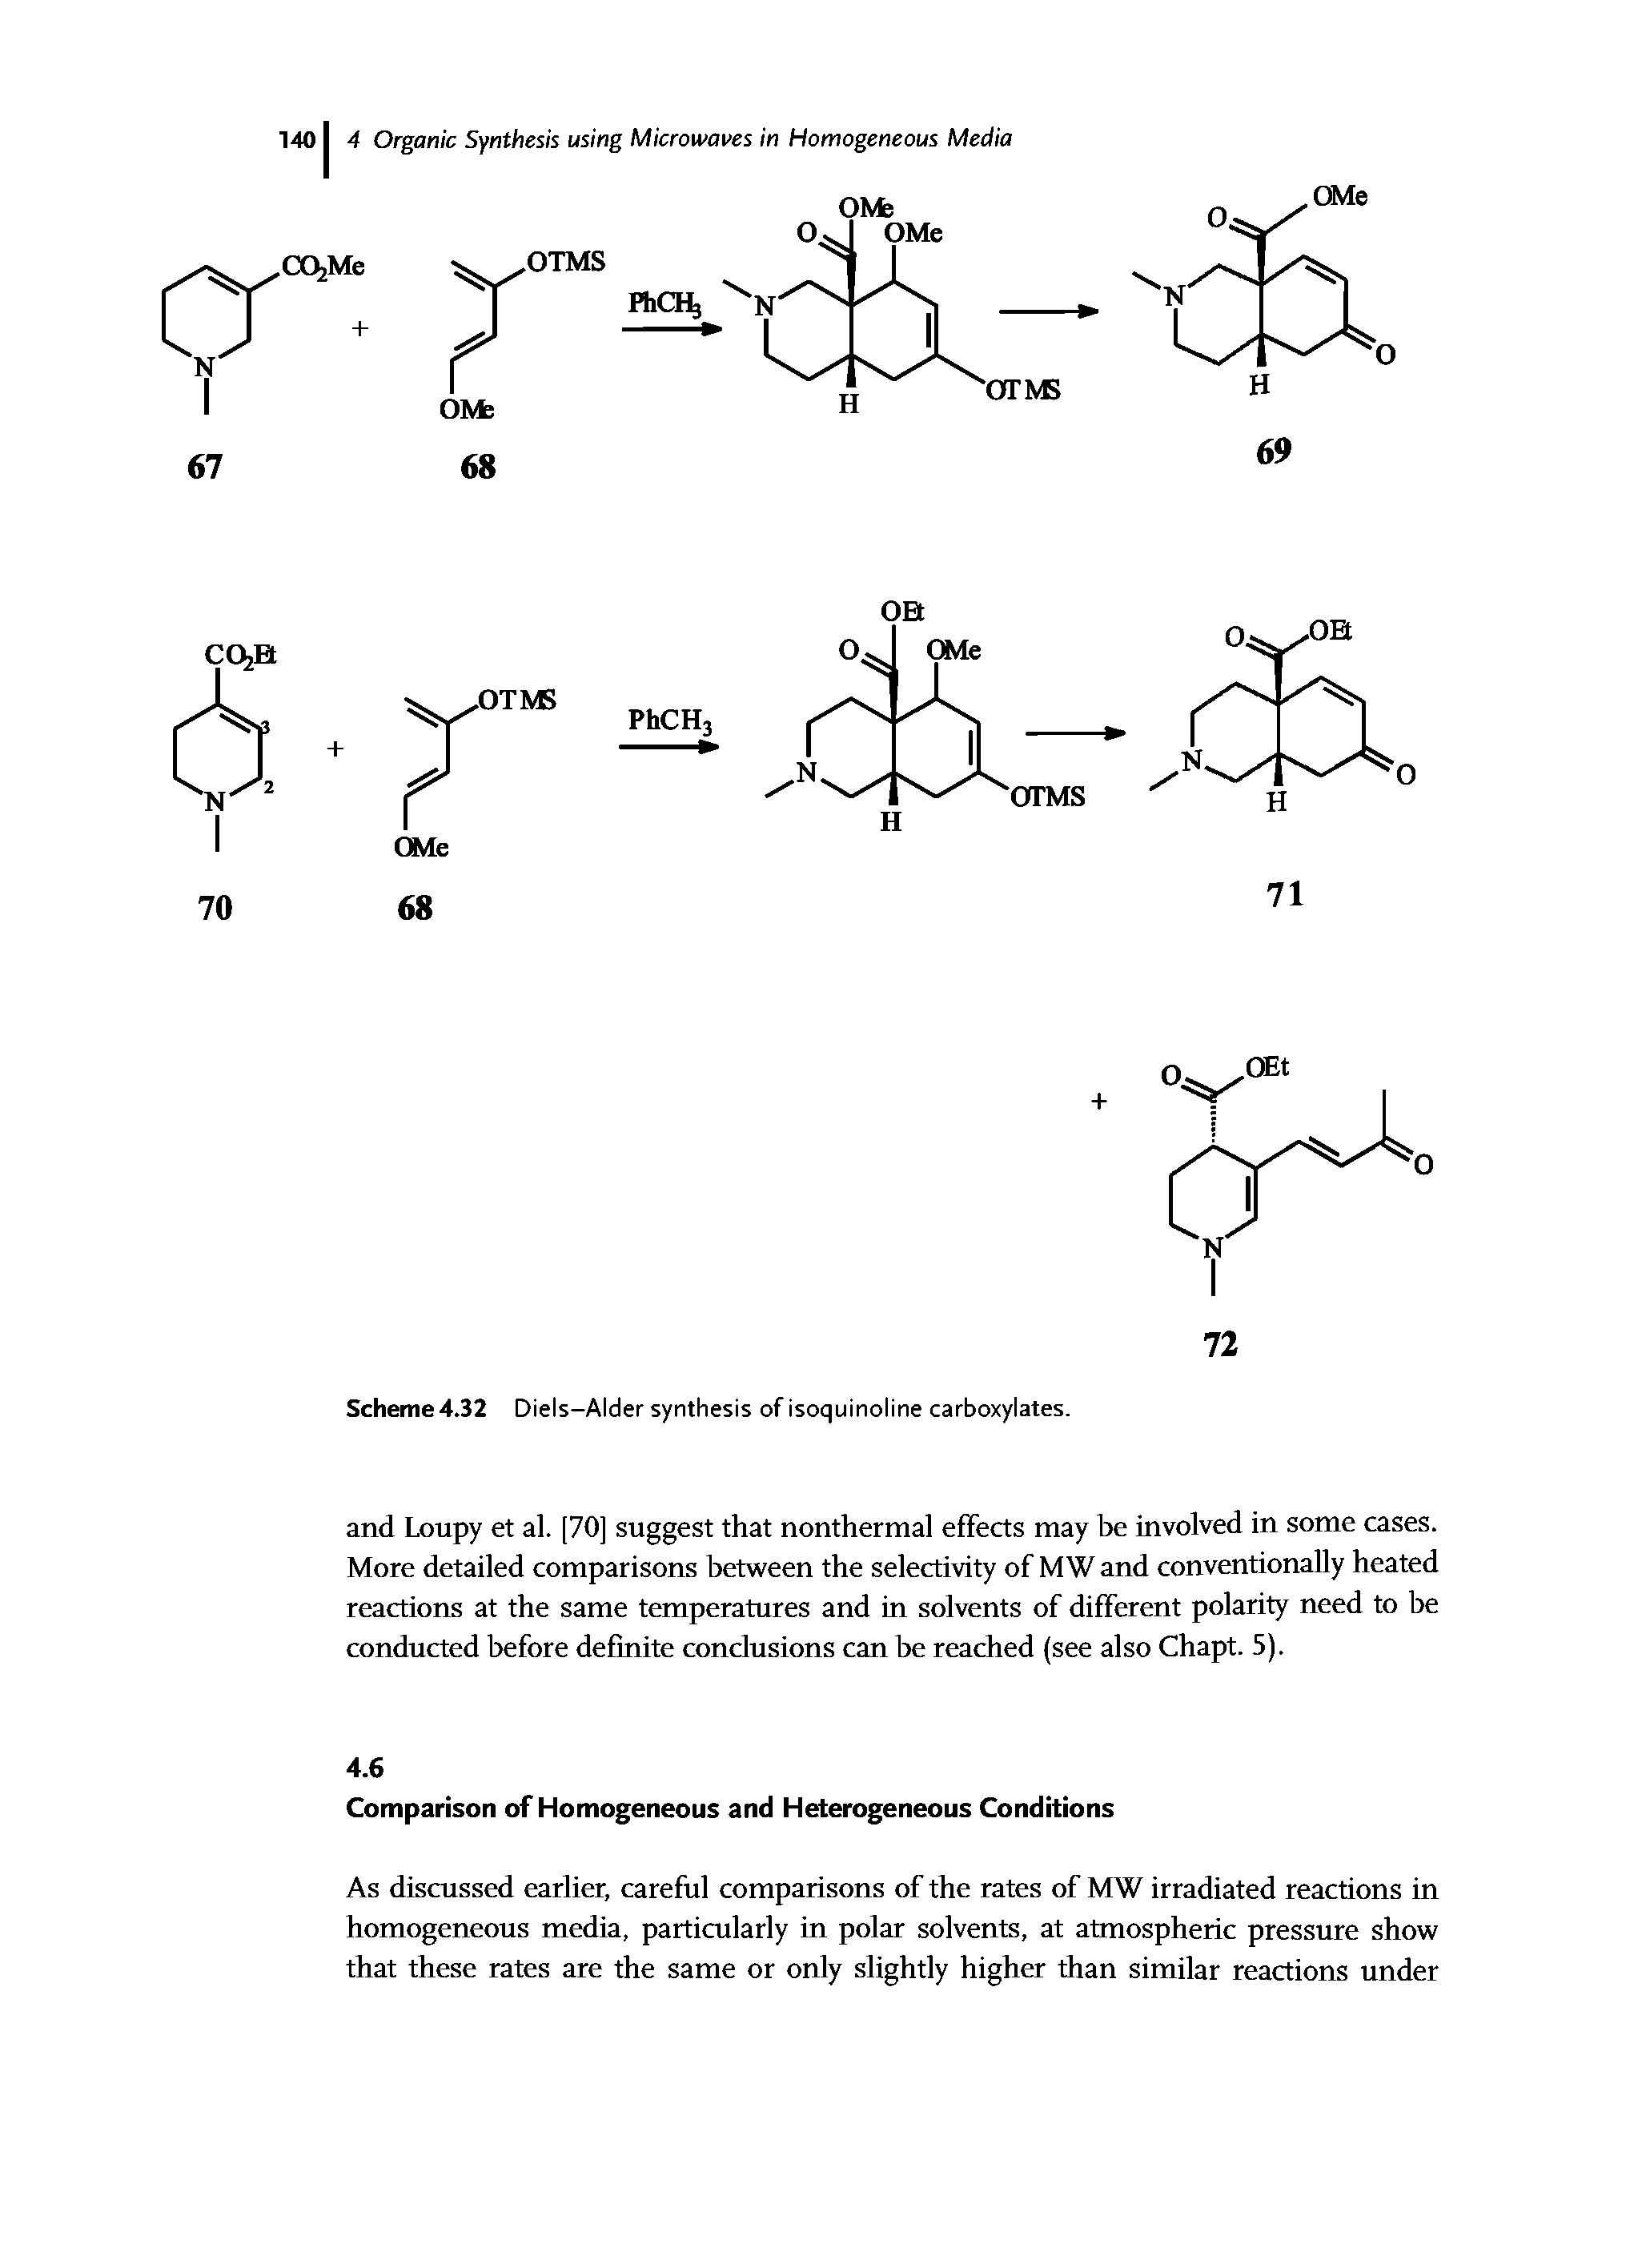 Scheme 4.32 Diels-Alder synthesis of isoquinoline carboxylates.